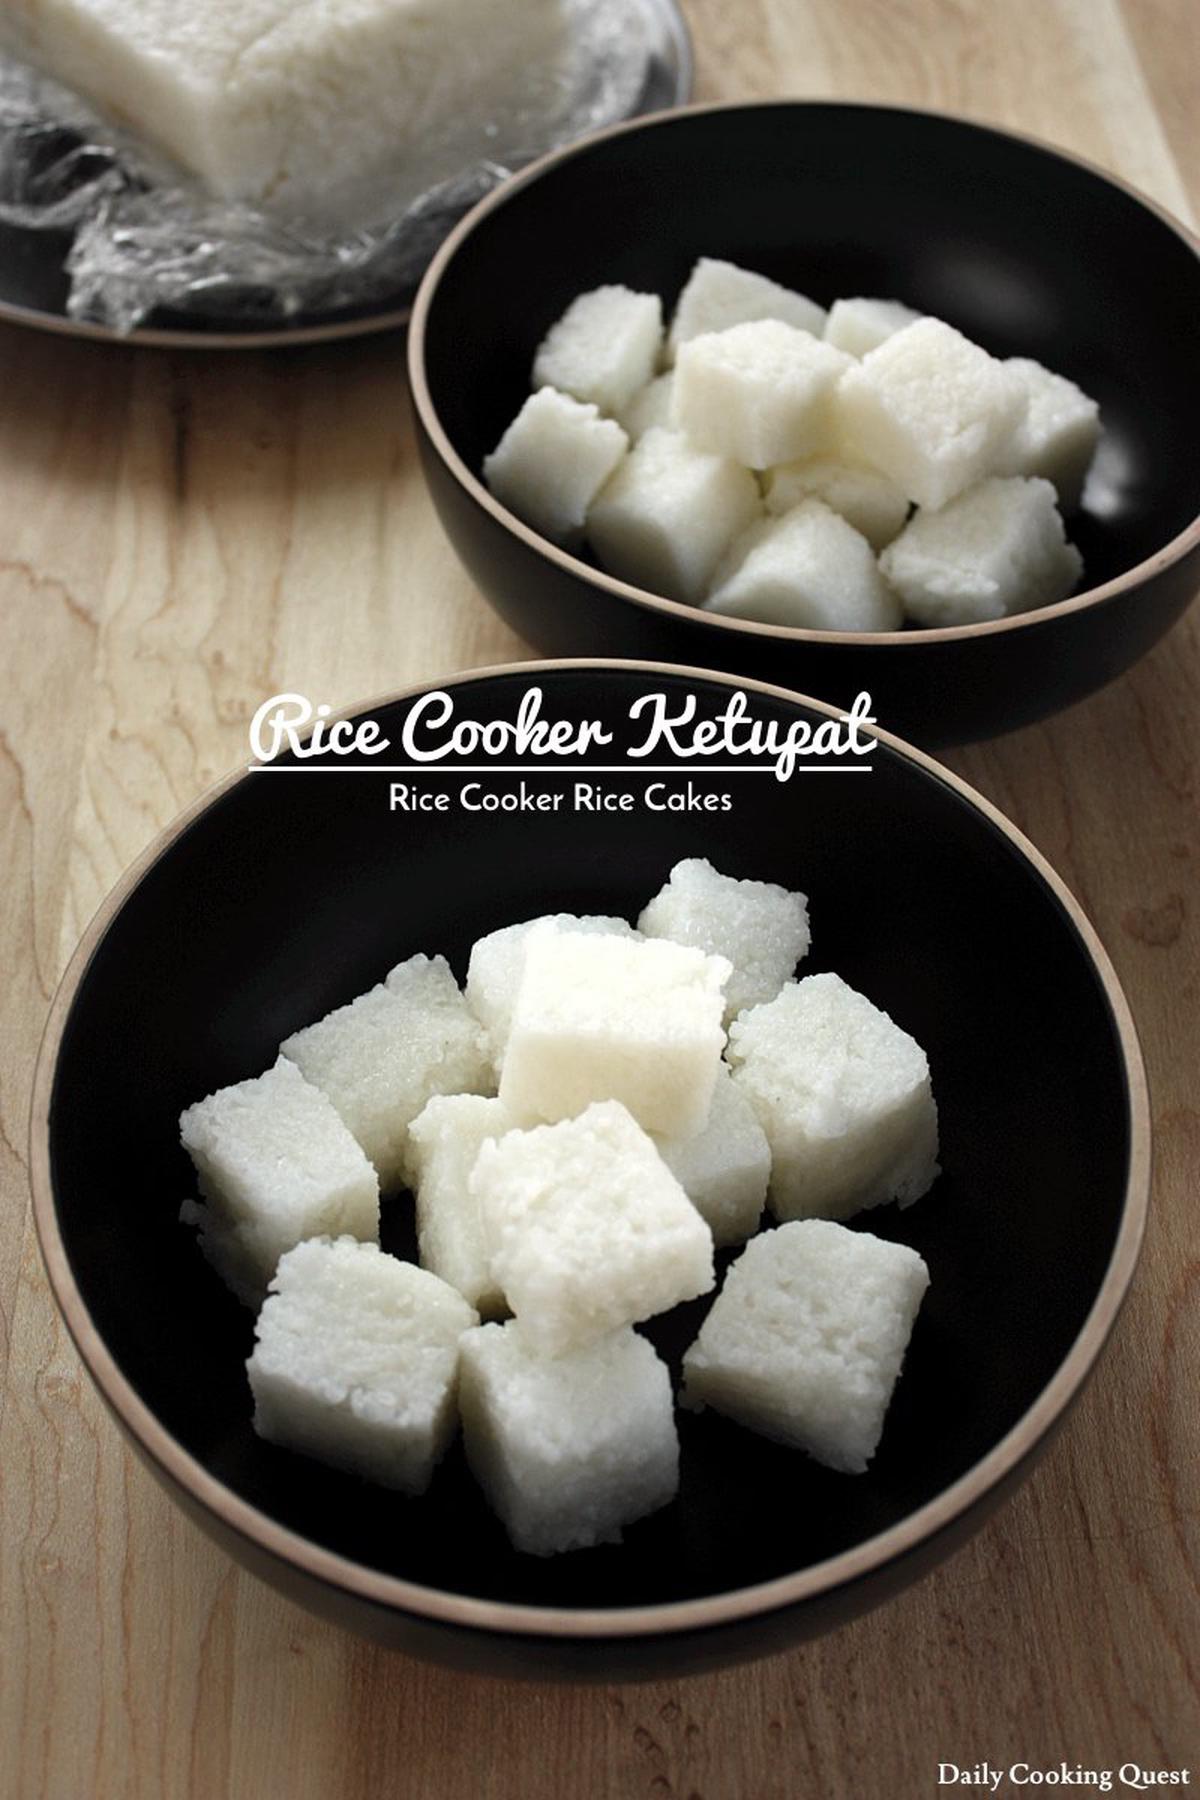 Rice Cooker Ketupat - Rice Cooker Rice Cakes